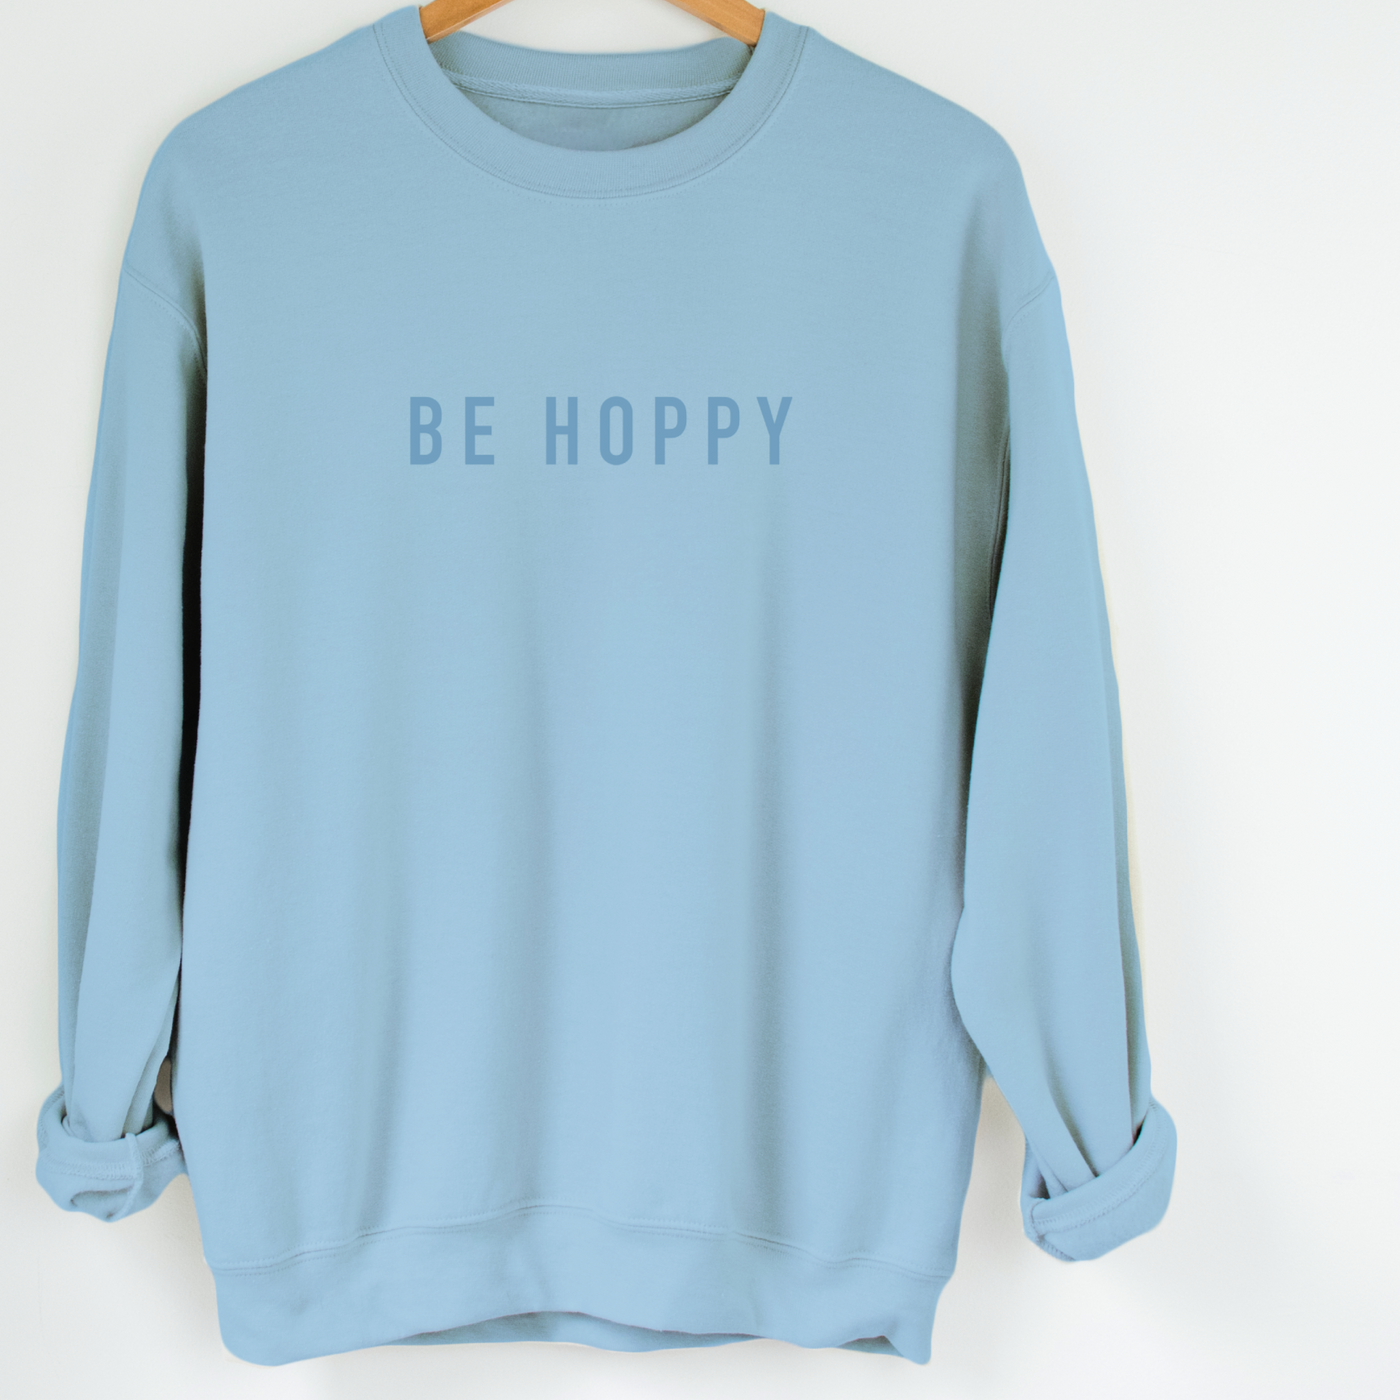 Be Hoppy Blue Sweatshirt